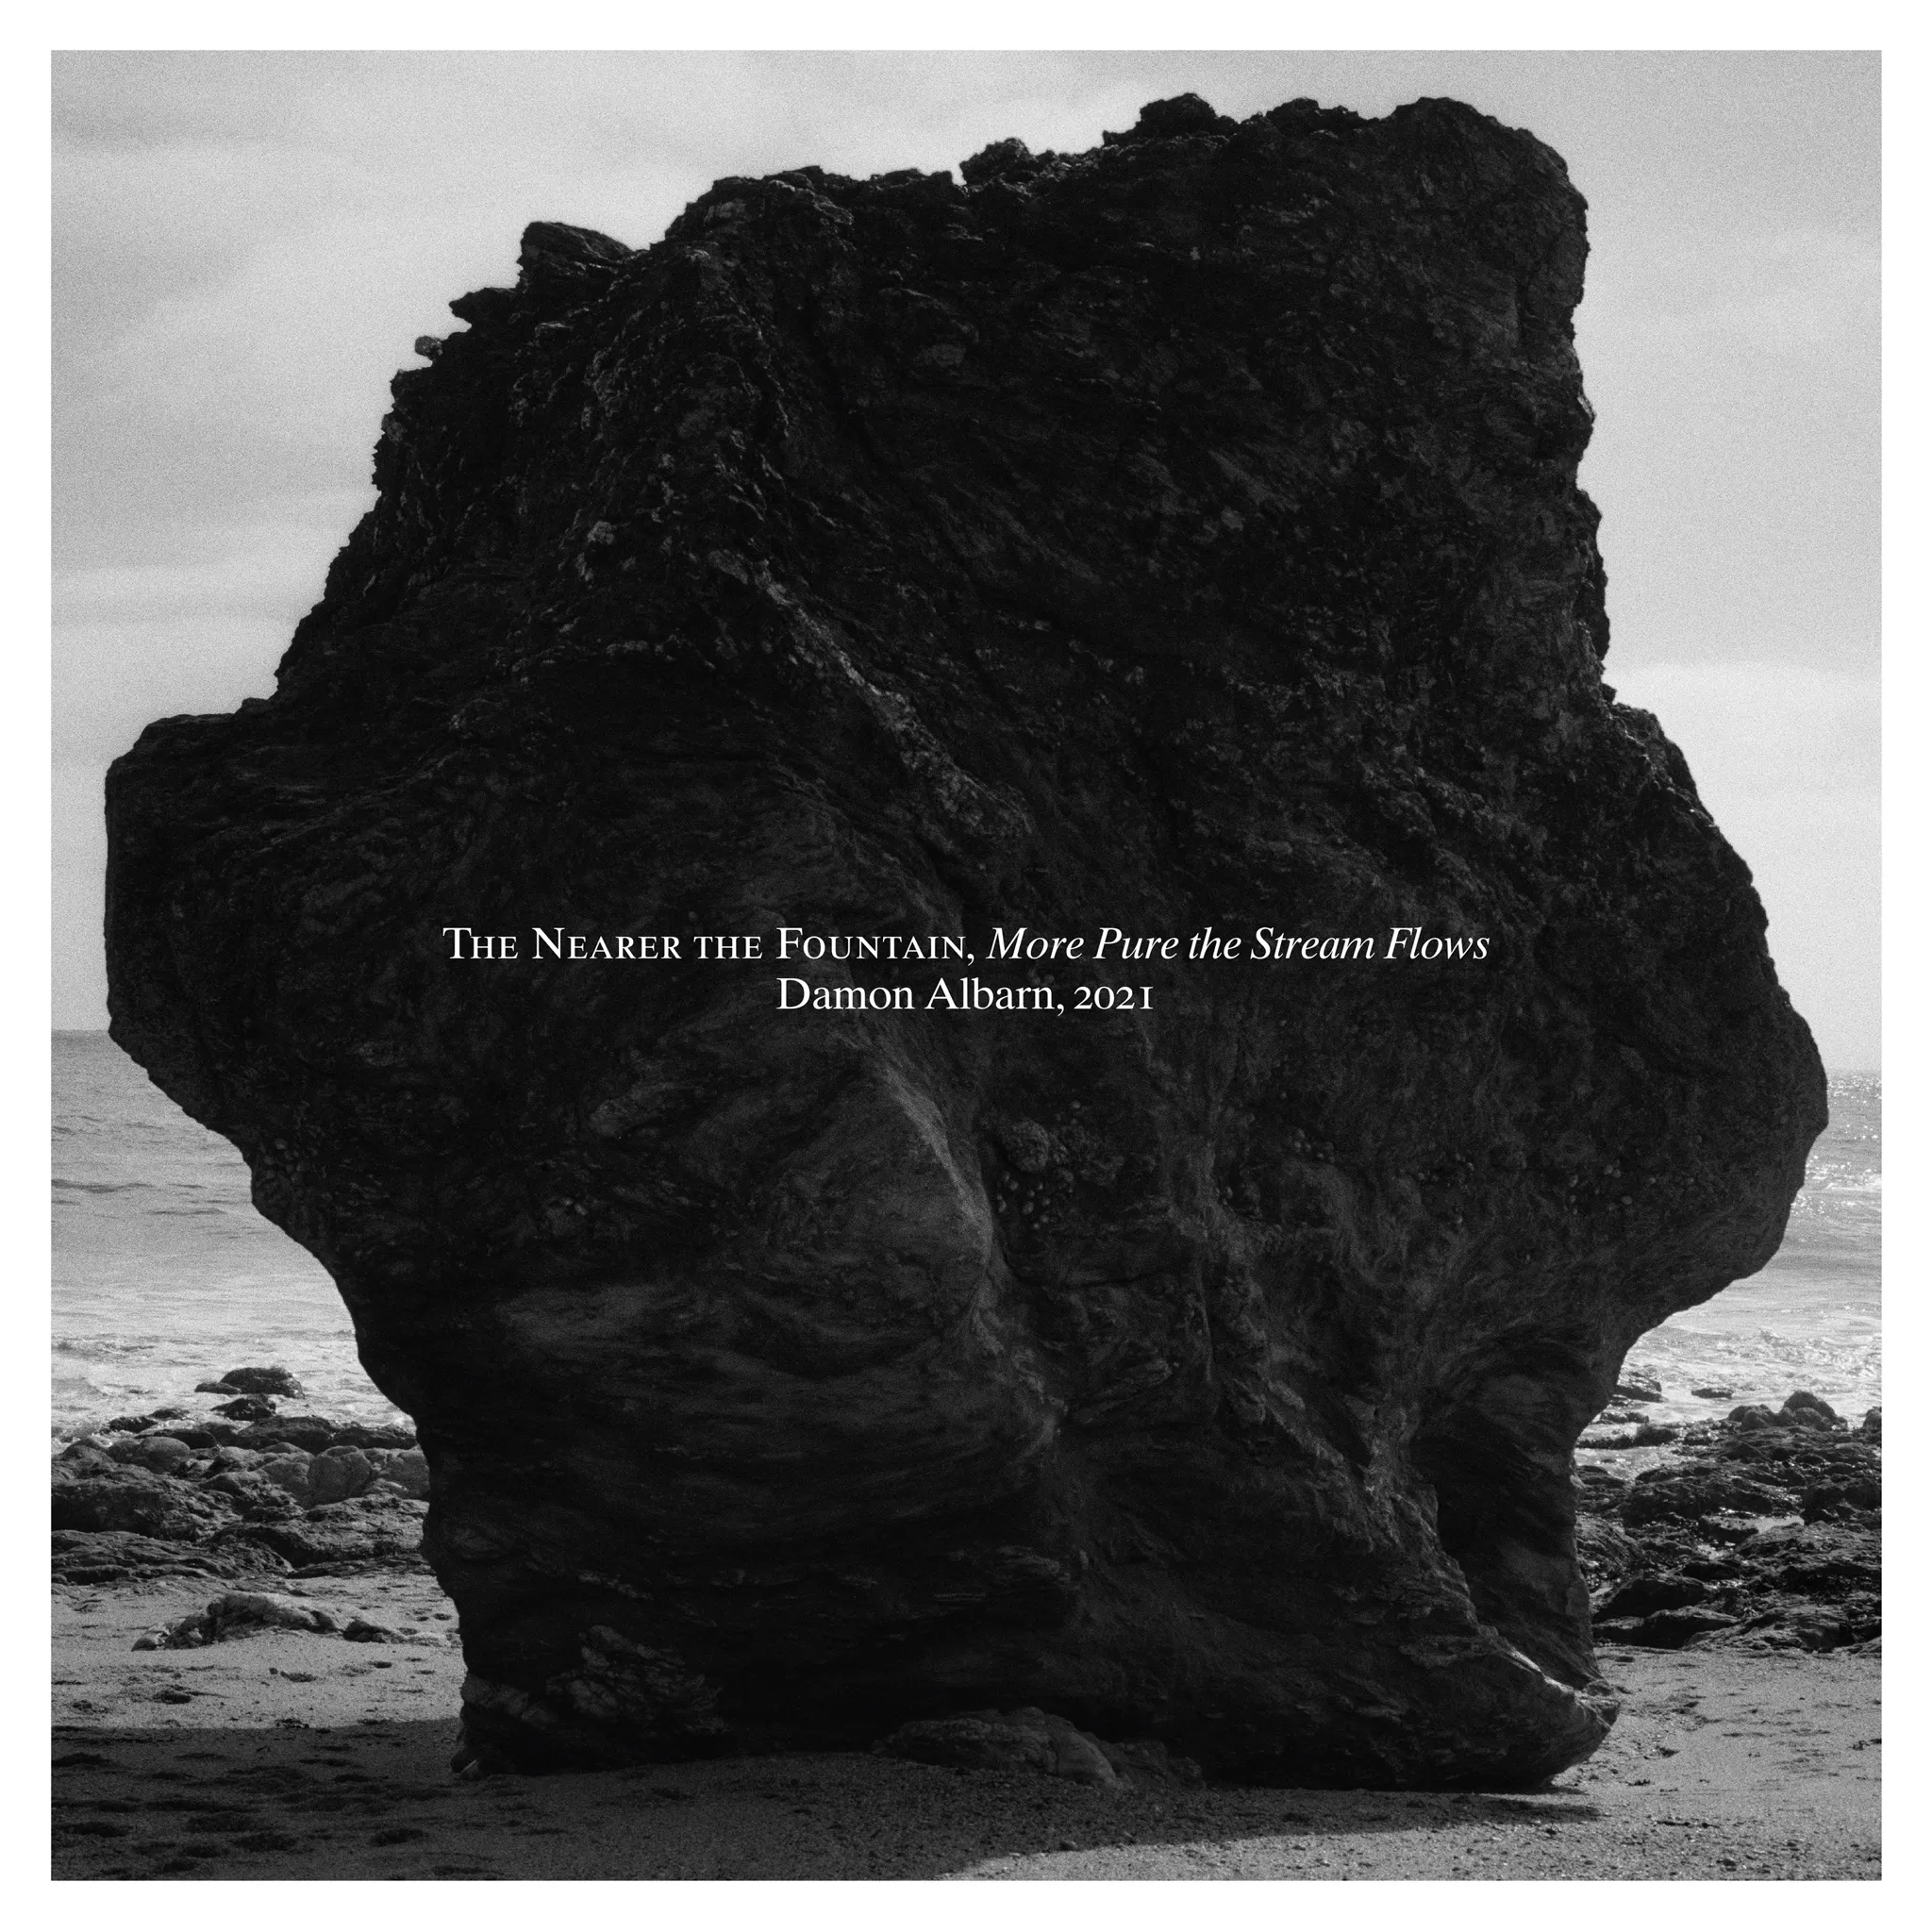 <strong>Damon Albarn - The Nearer the Fountain, More Pure the Stream Flows</strong> (Vinyl LP - black)